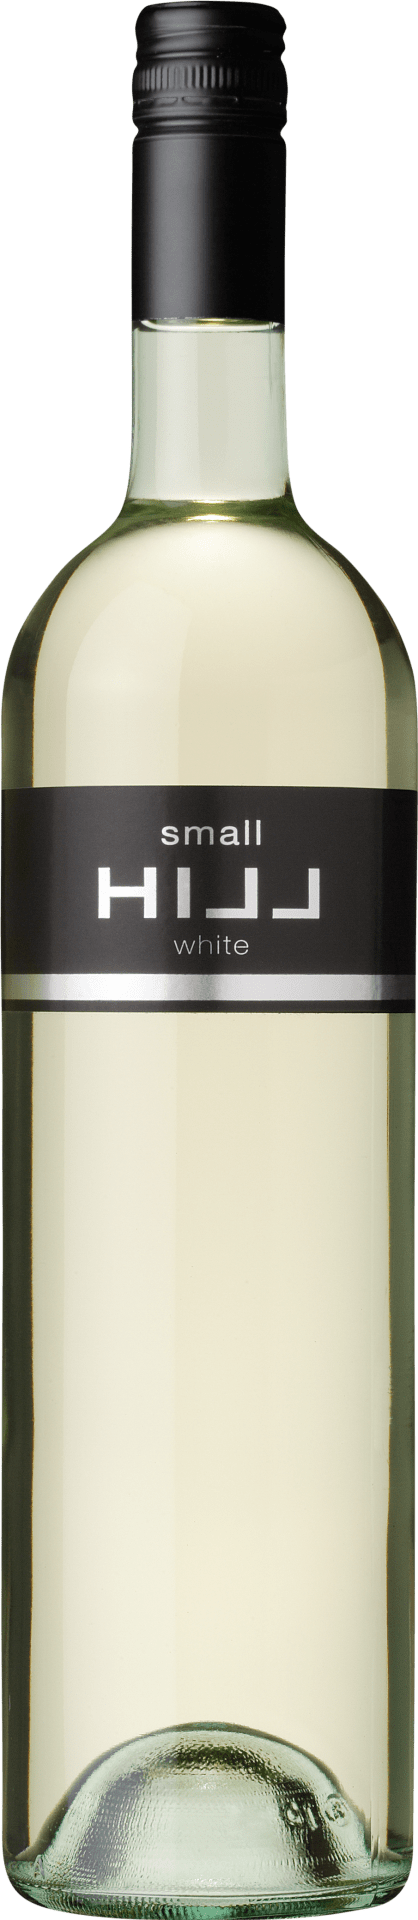 Small Hill White